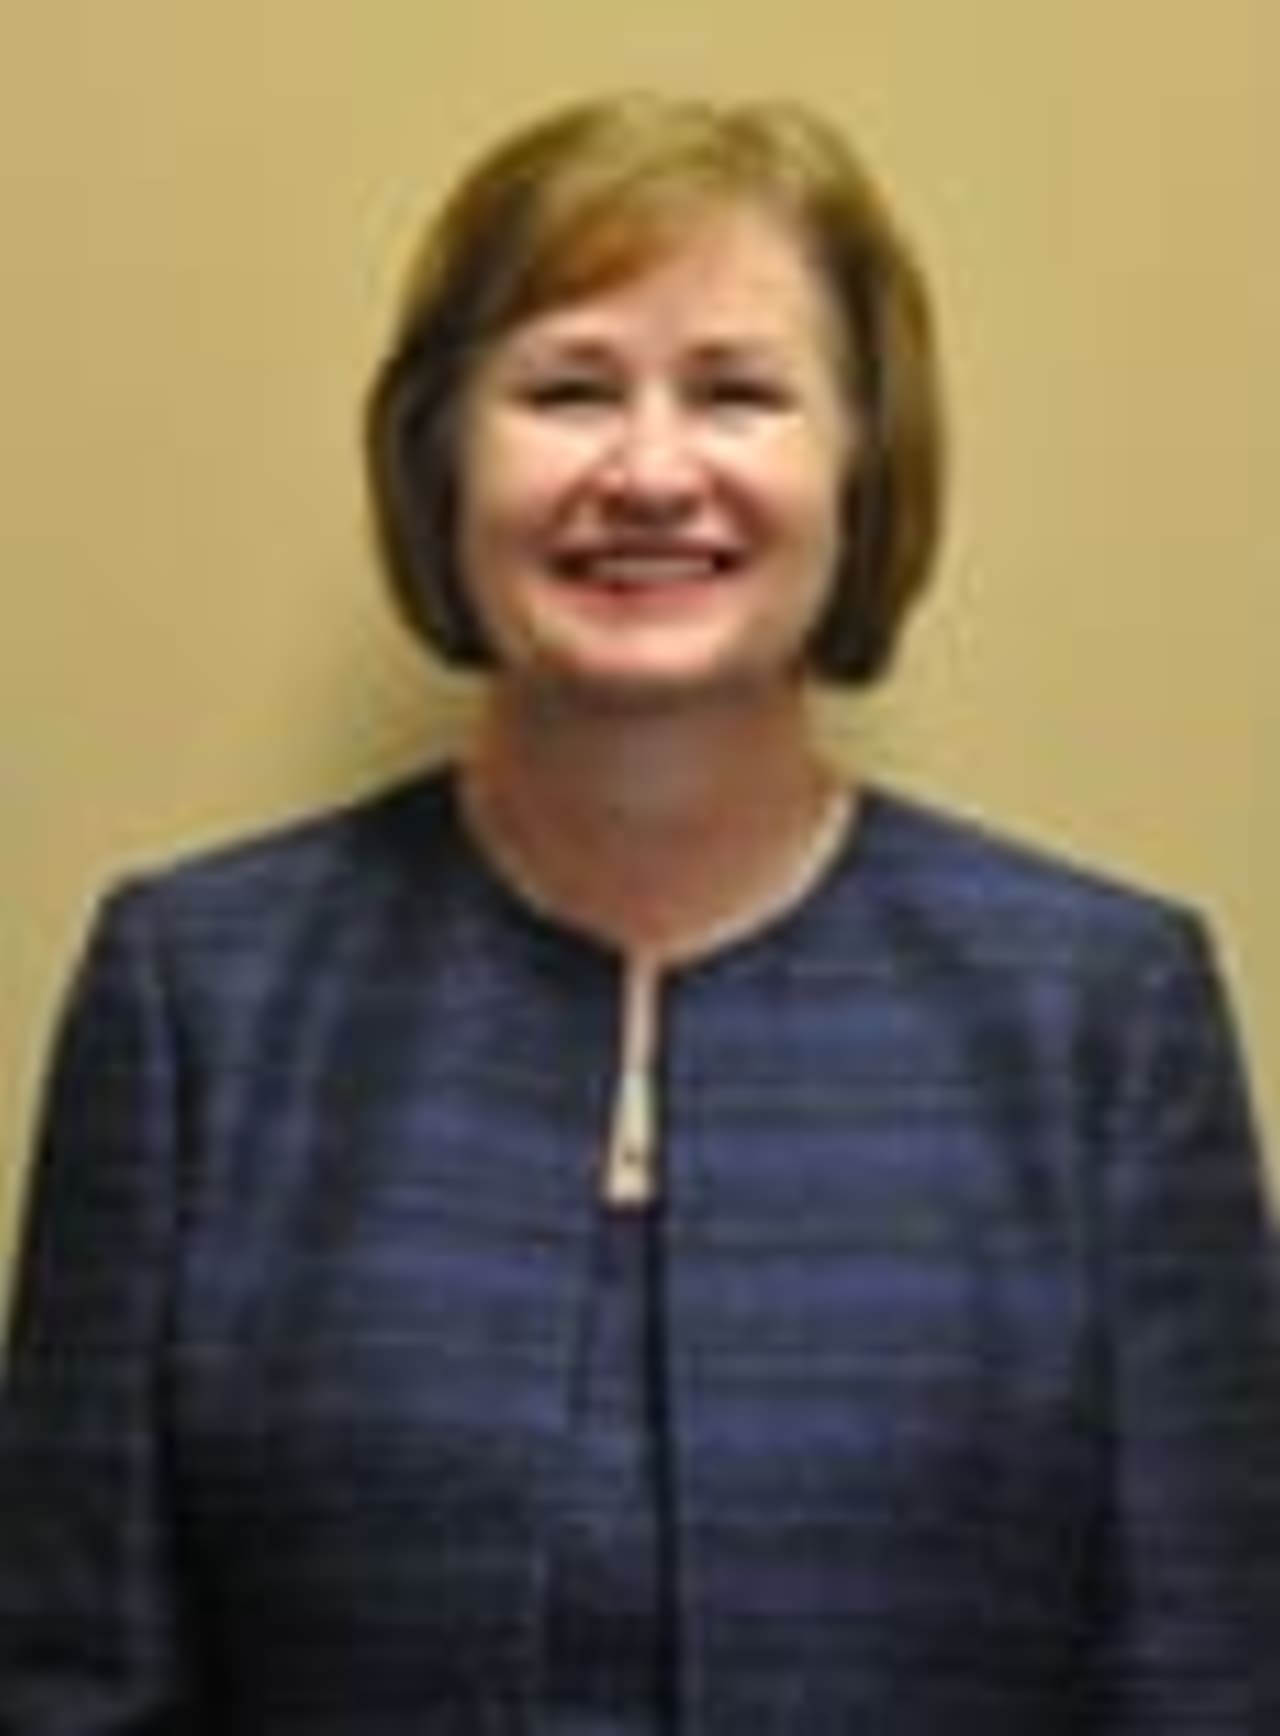 Anita Gliniecki has been named the interim president of St. Vincent College in Bridgeport.